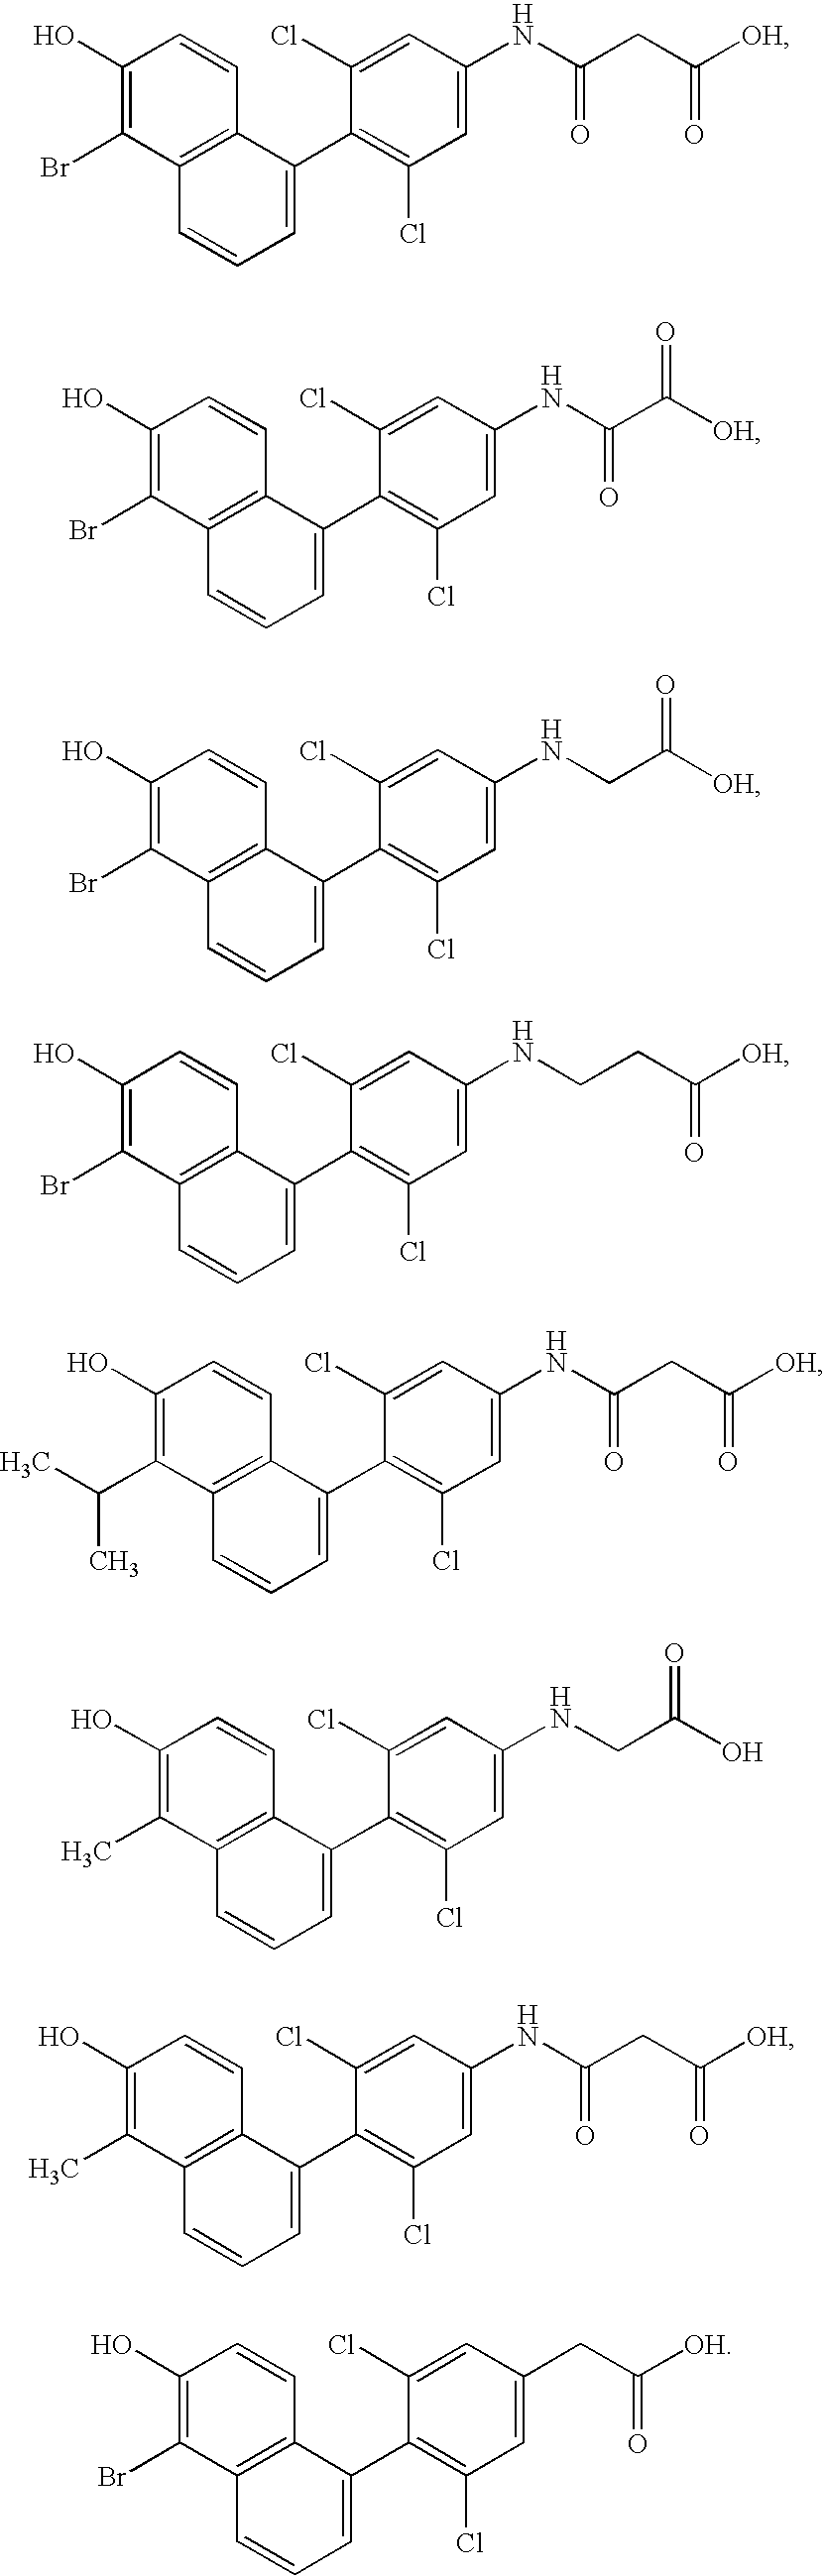 Phenyl naphthol ligands for thyroid hormone receptor